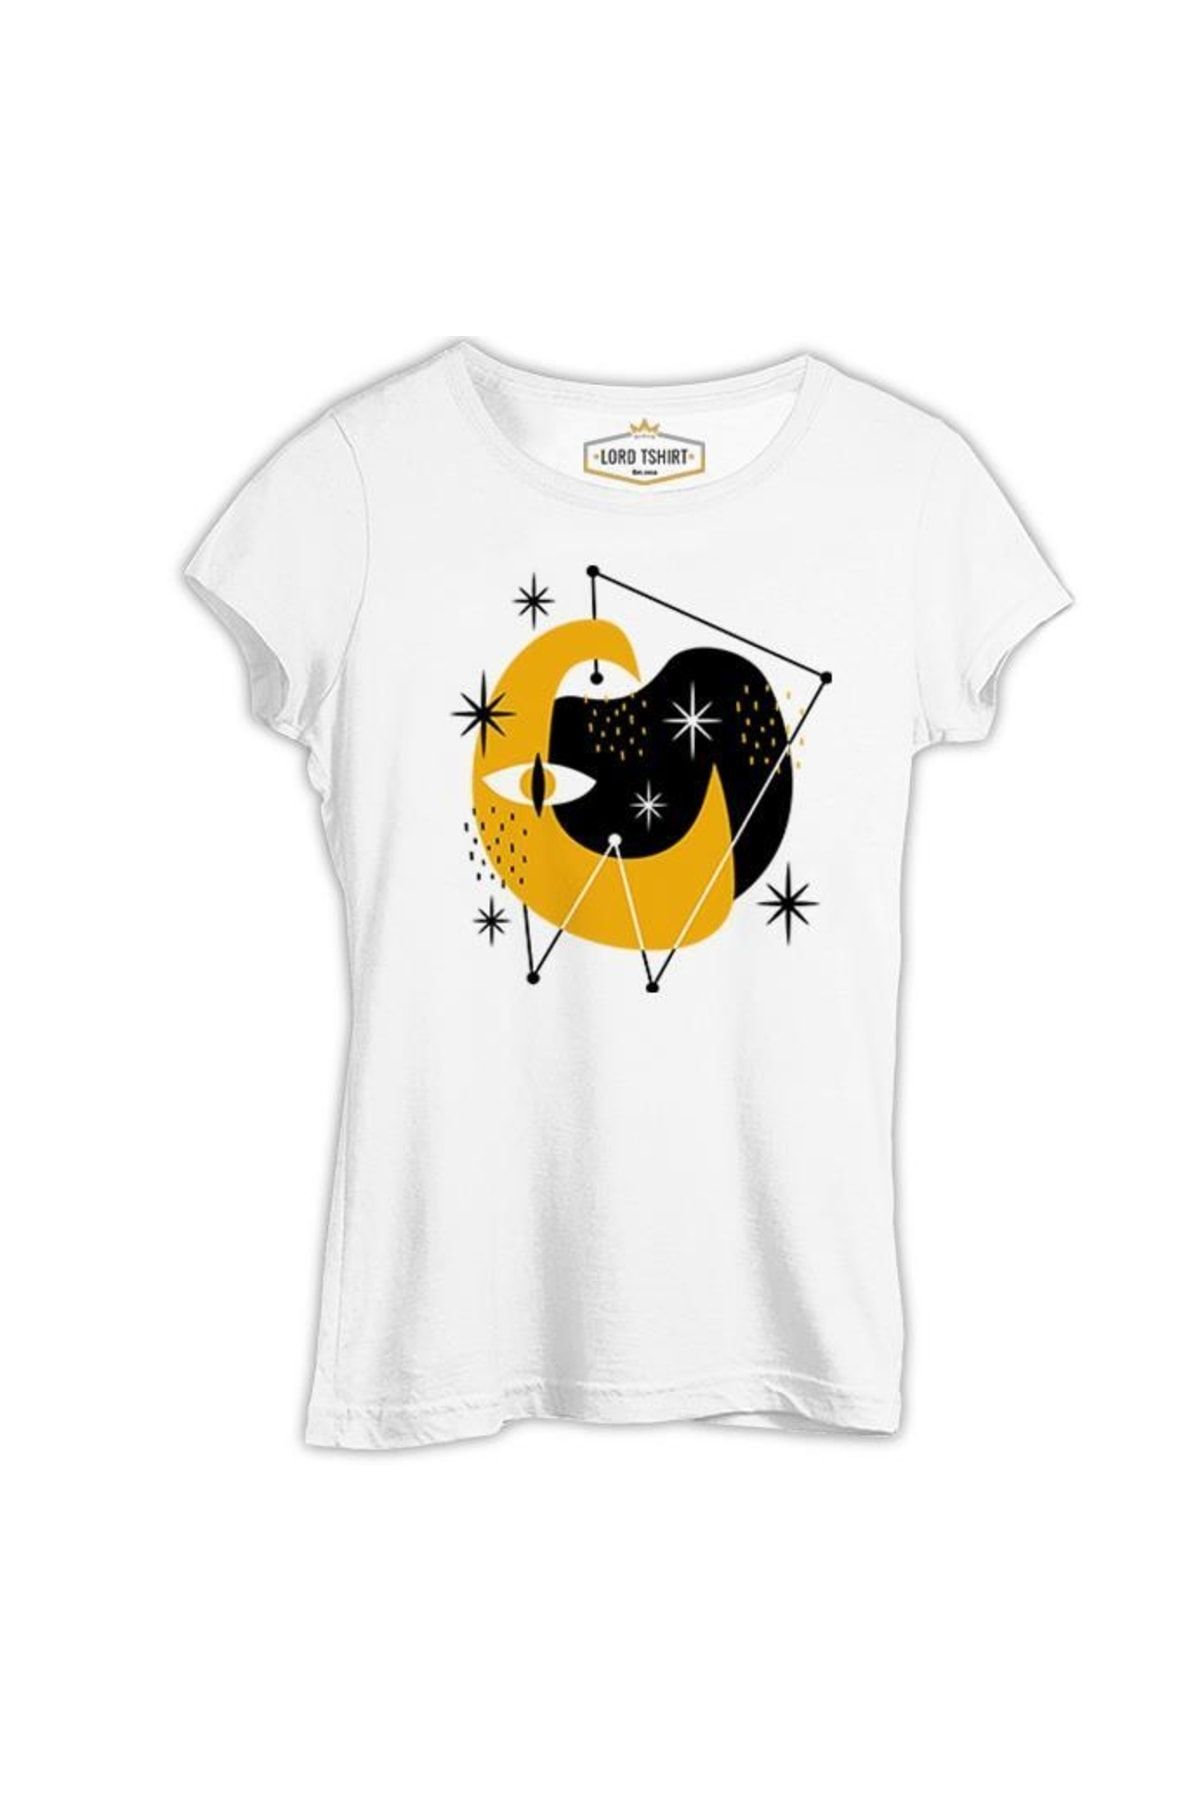 Lord T-Shirt Abstract Design Of Moon And Stars Beyaz Tshirt